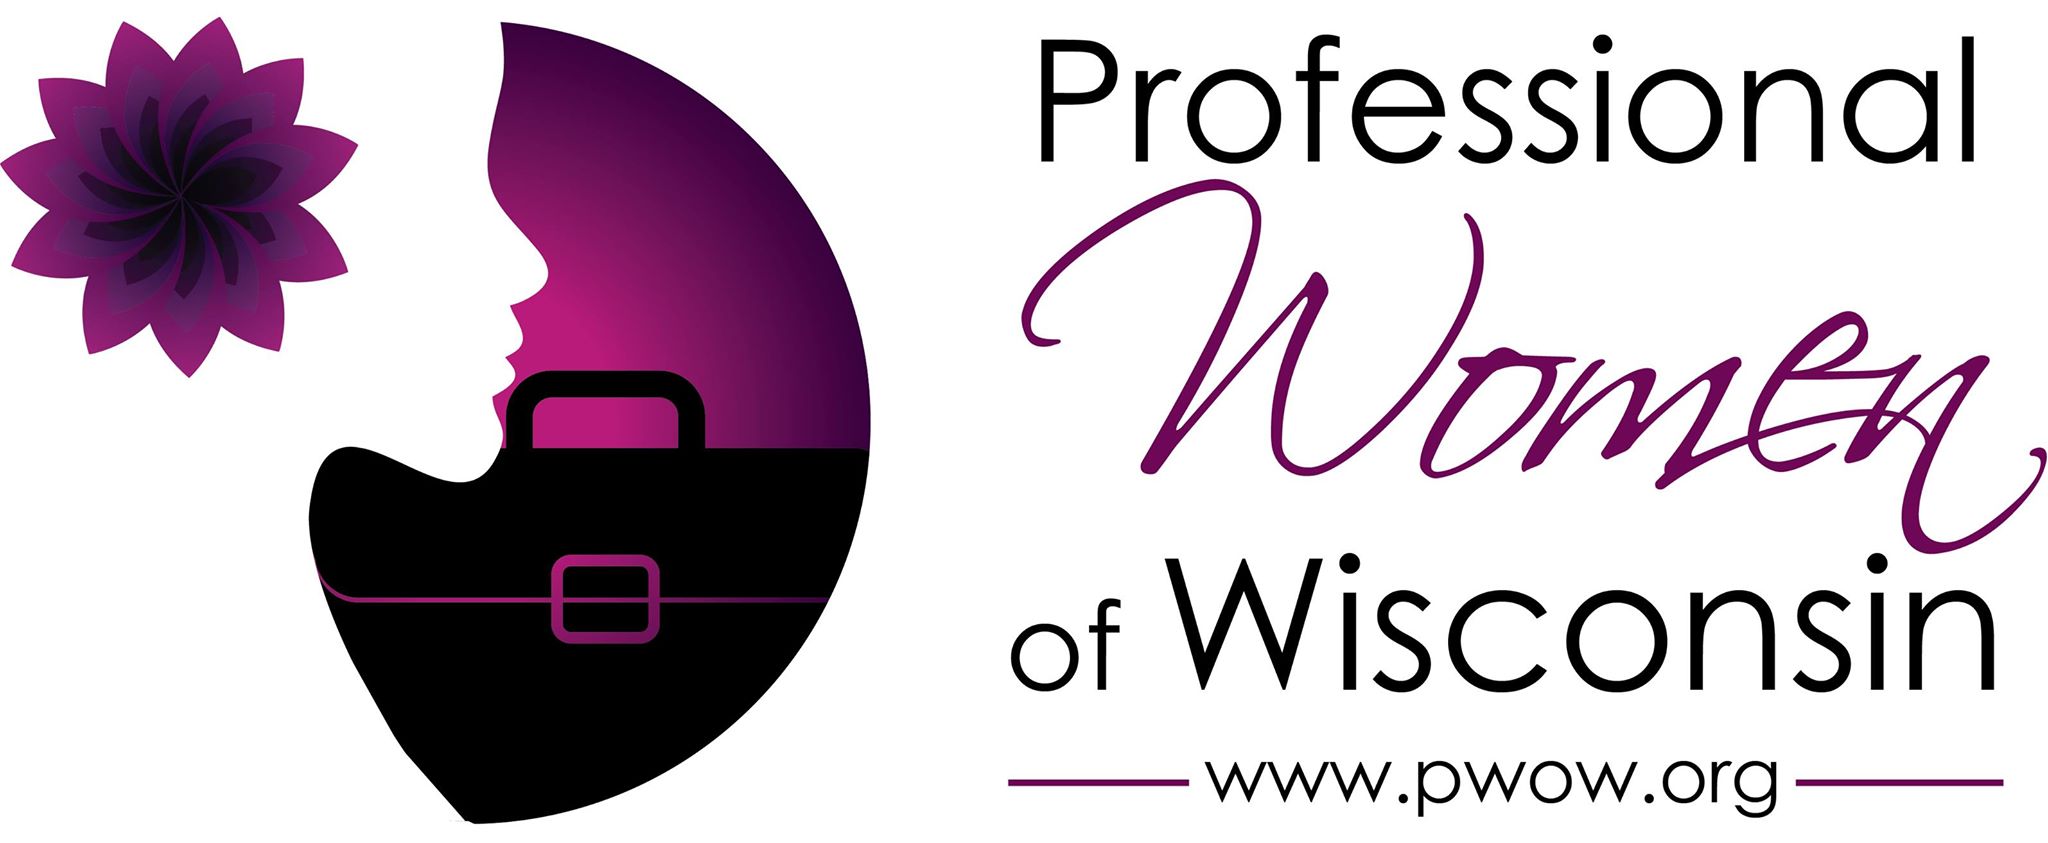 Professional Women of Wisconsin